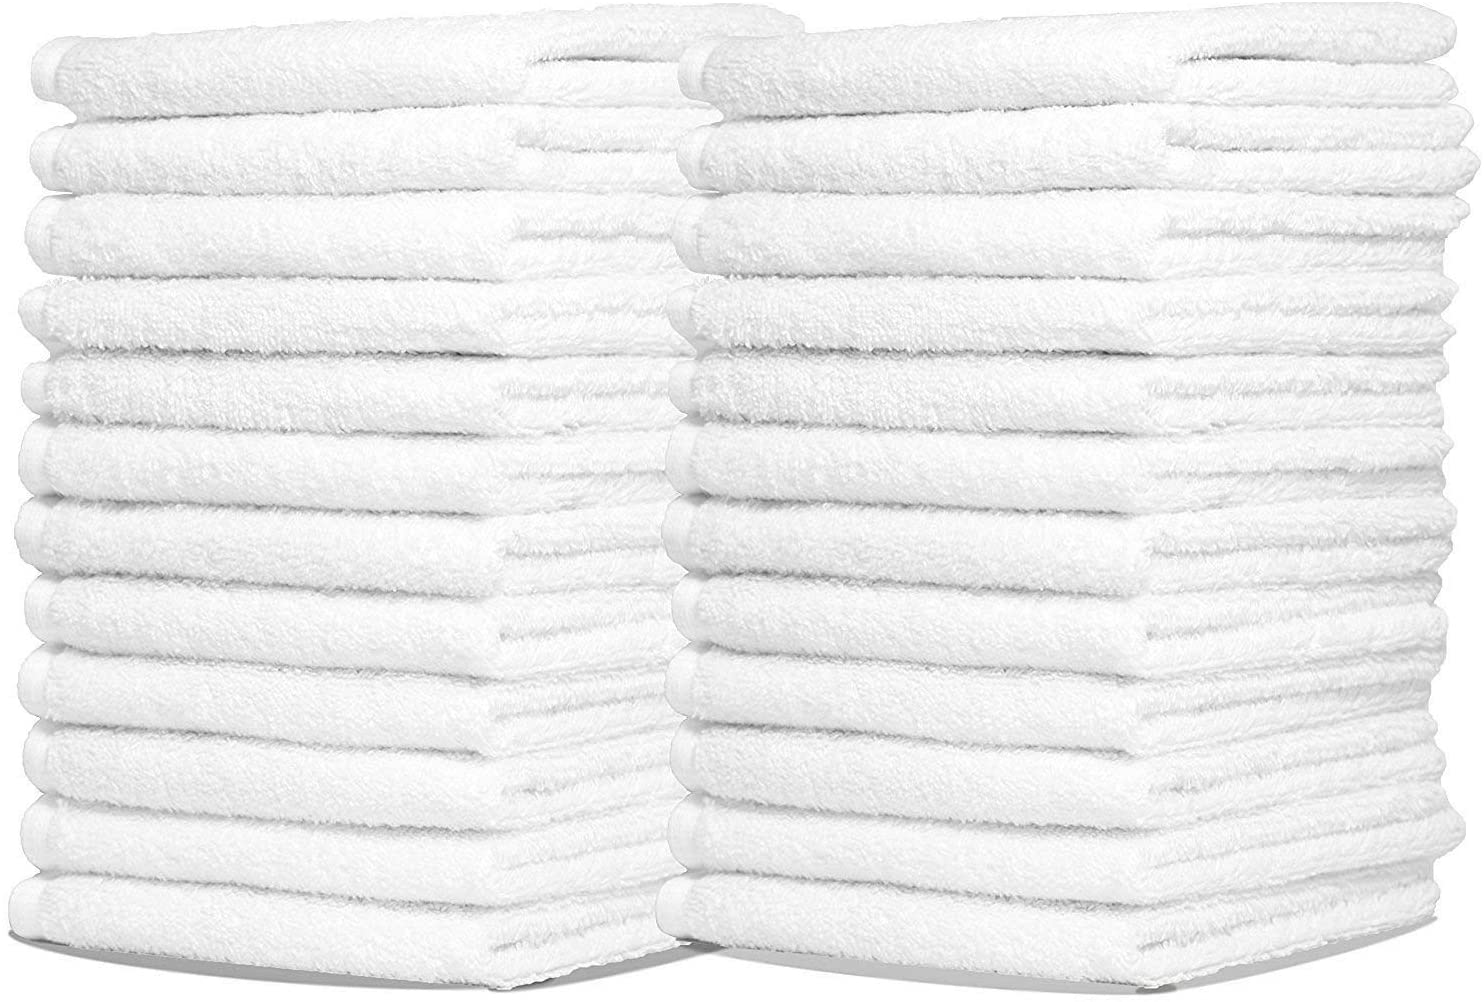 12x12-White Washcloths-Premium 100% Cotton